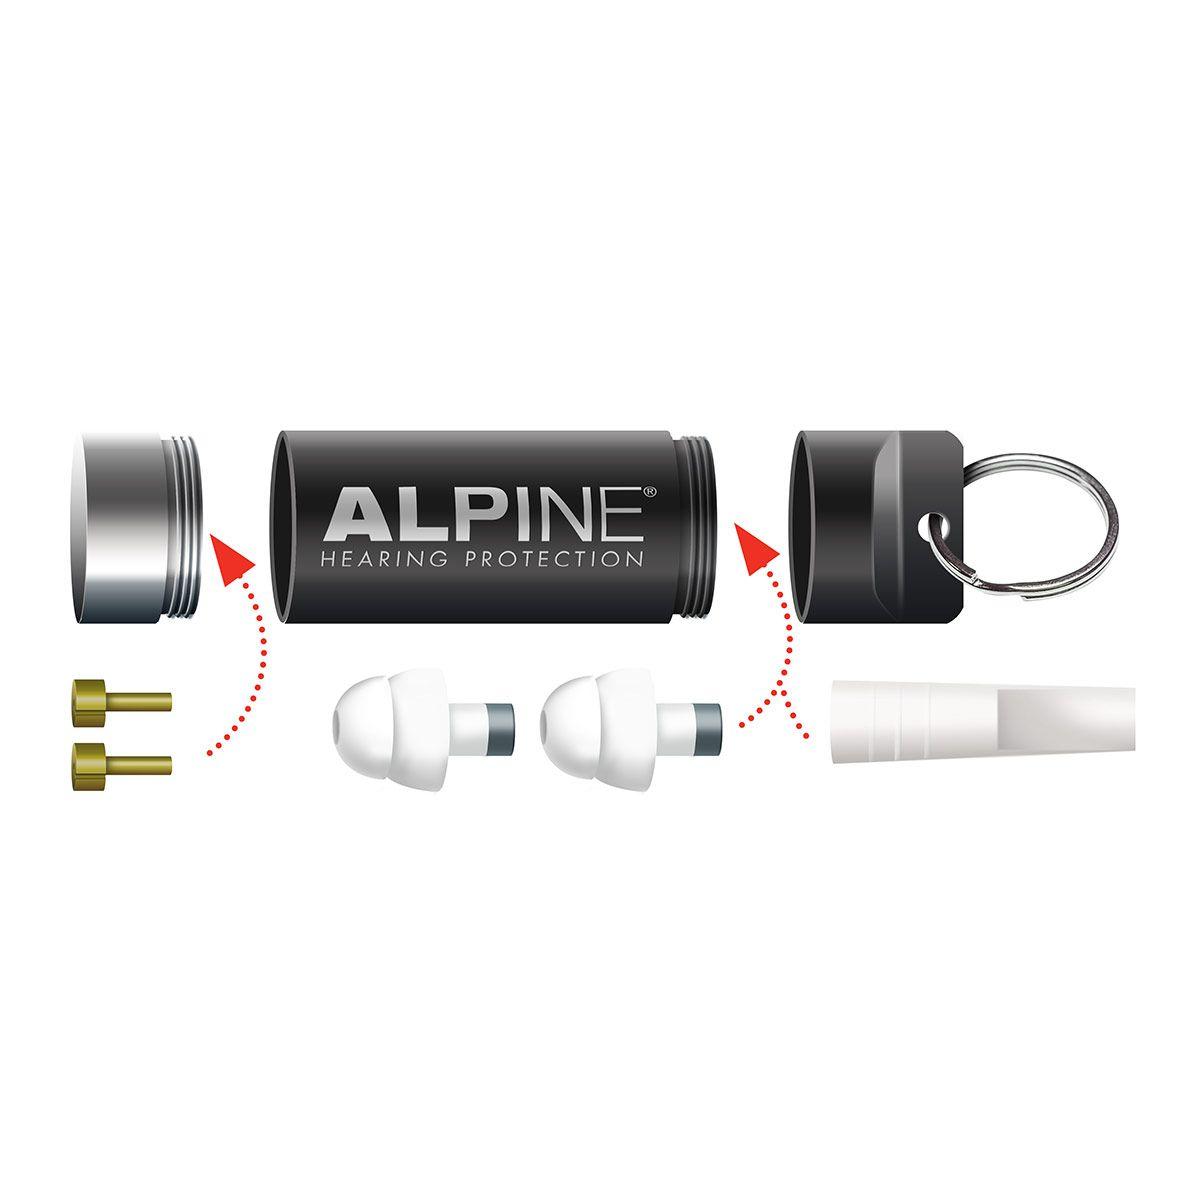 Alpine Logo - Travelbox deluxe - Storage tube for storing your earplugs